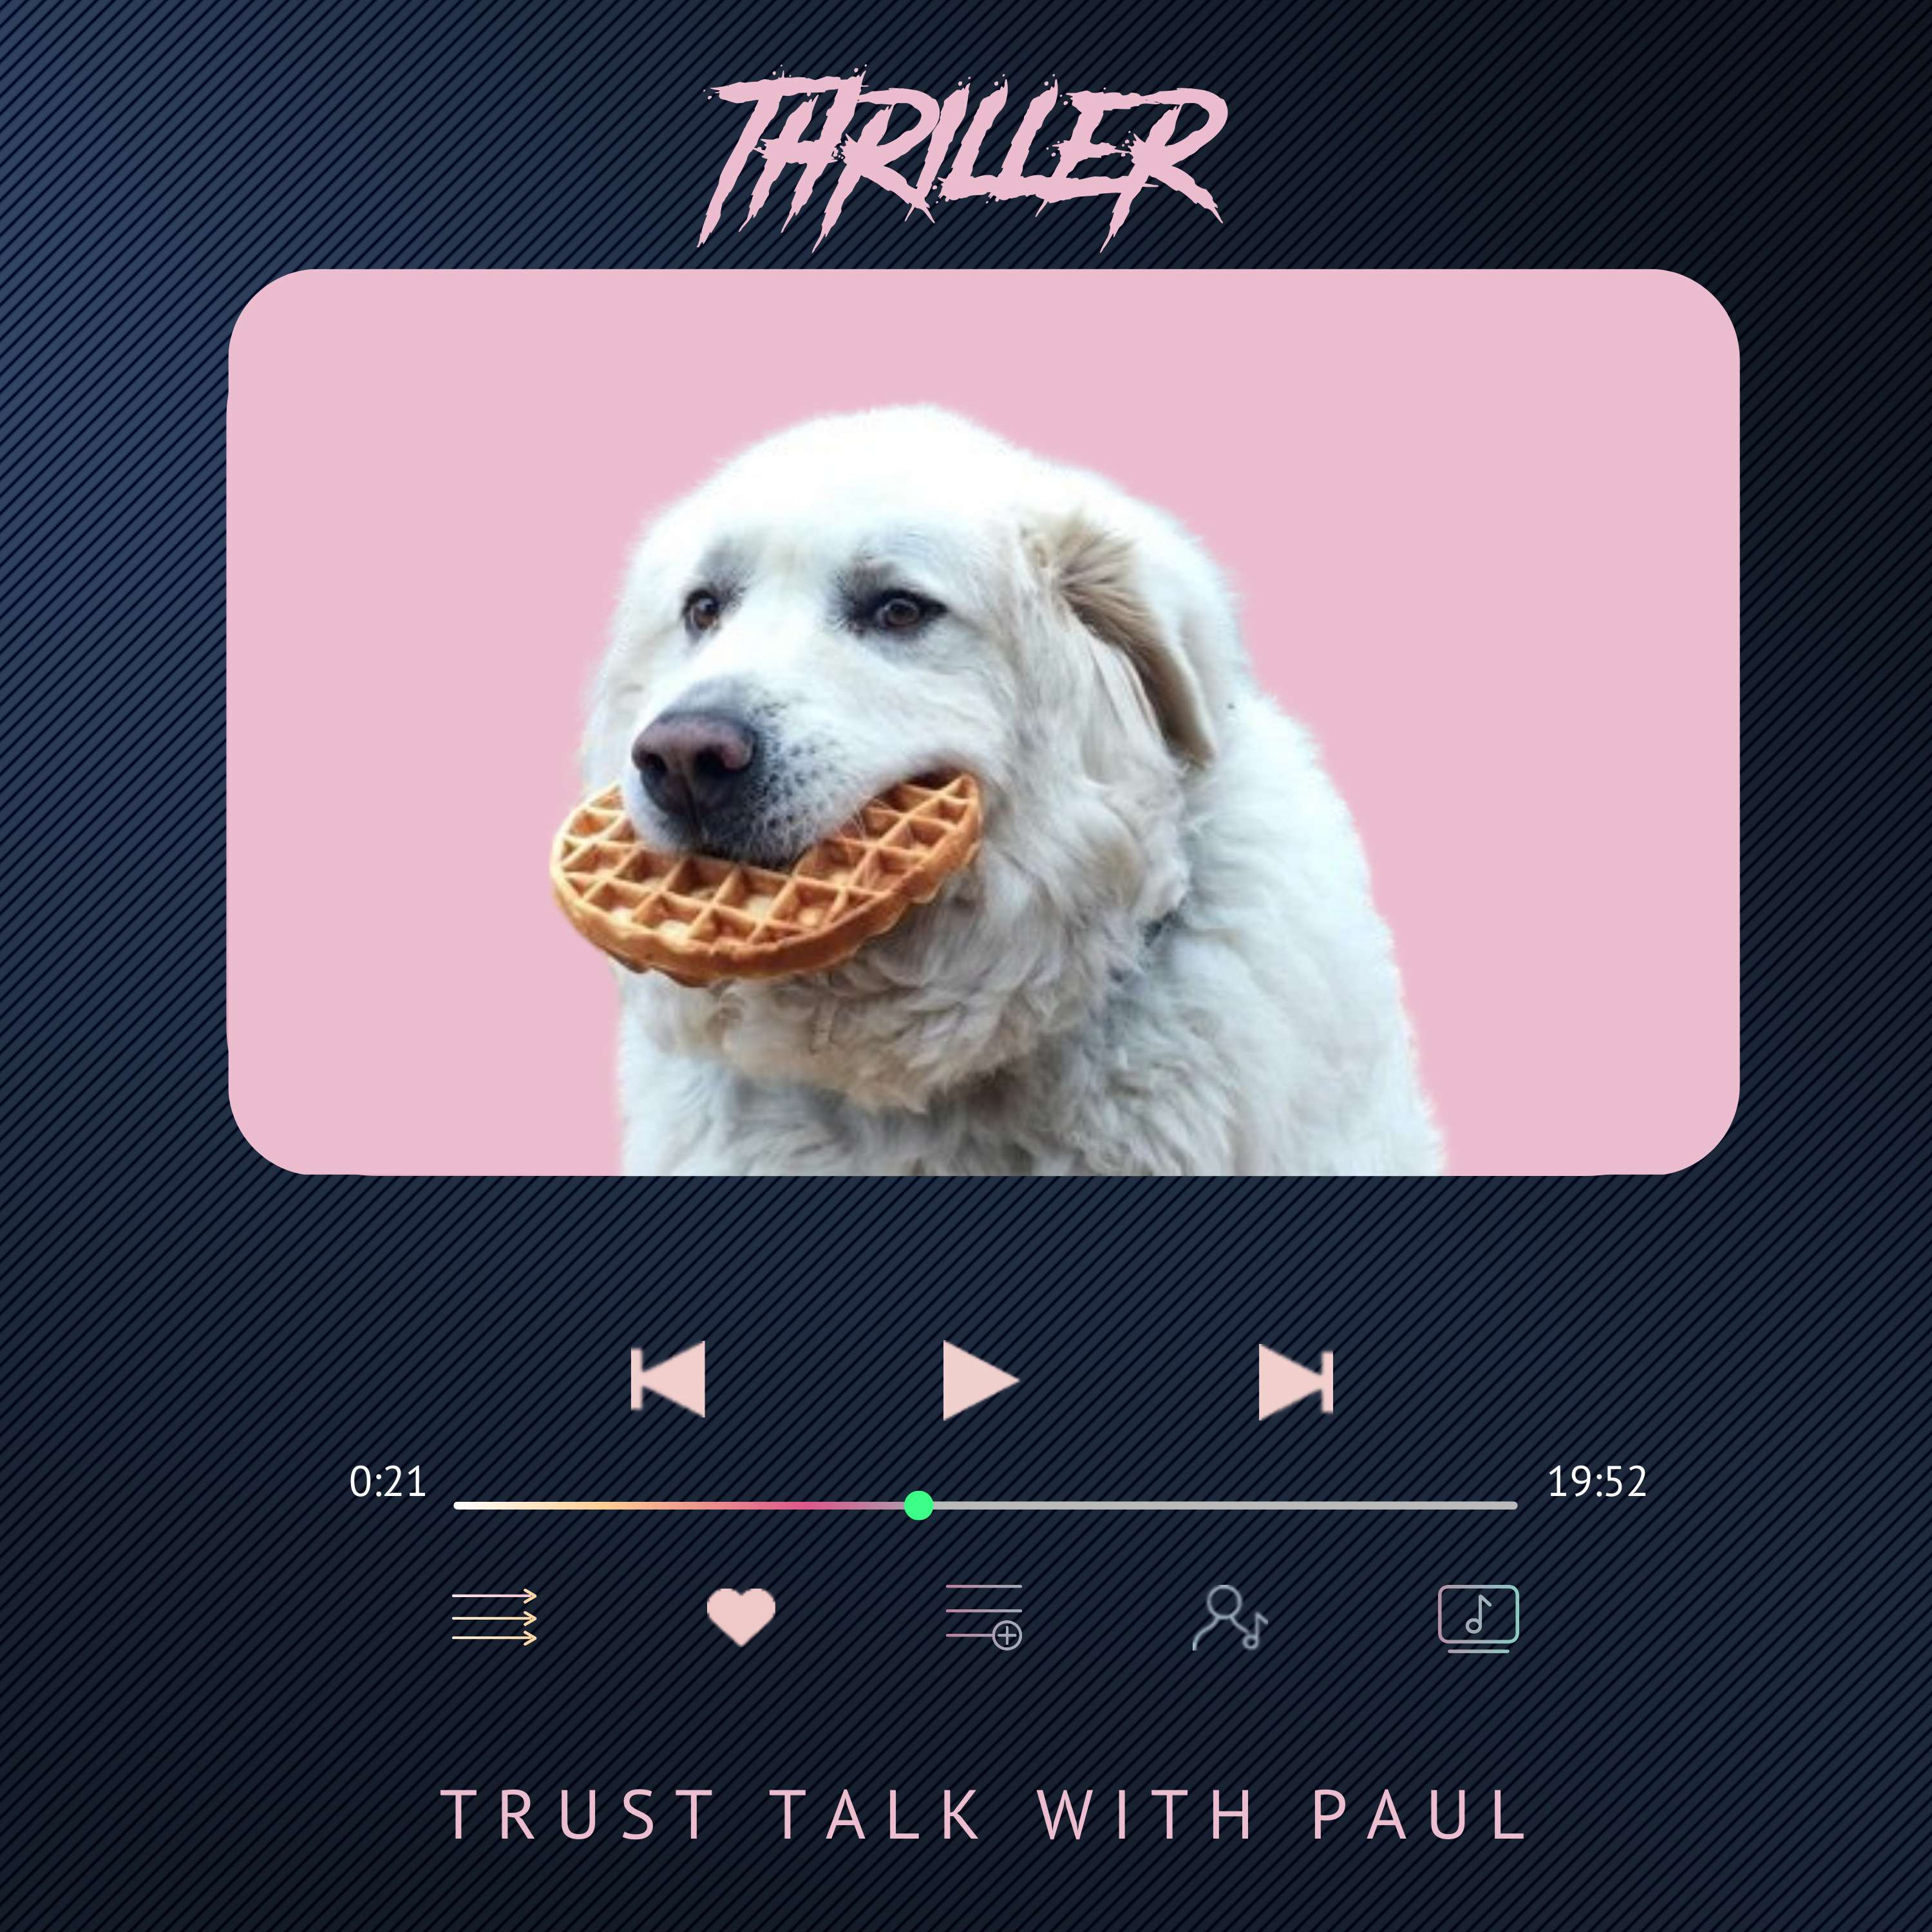 Trust talk with Paul